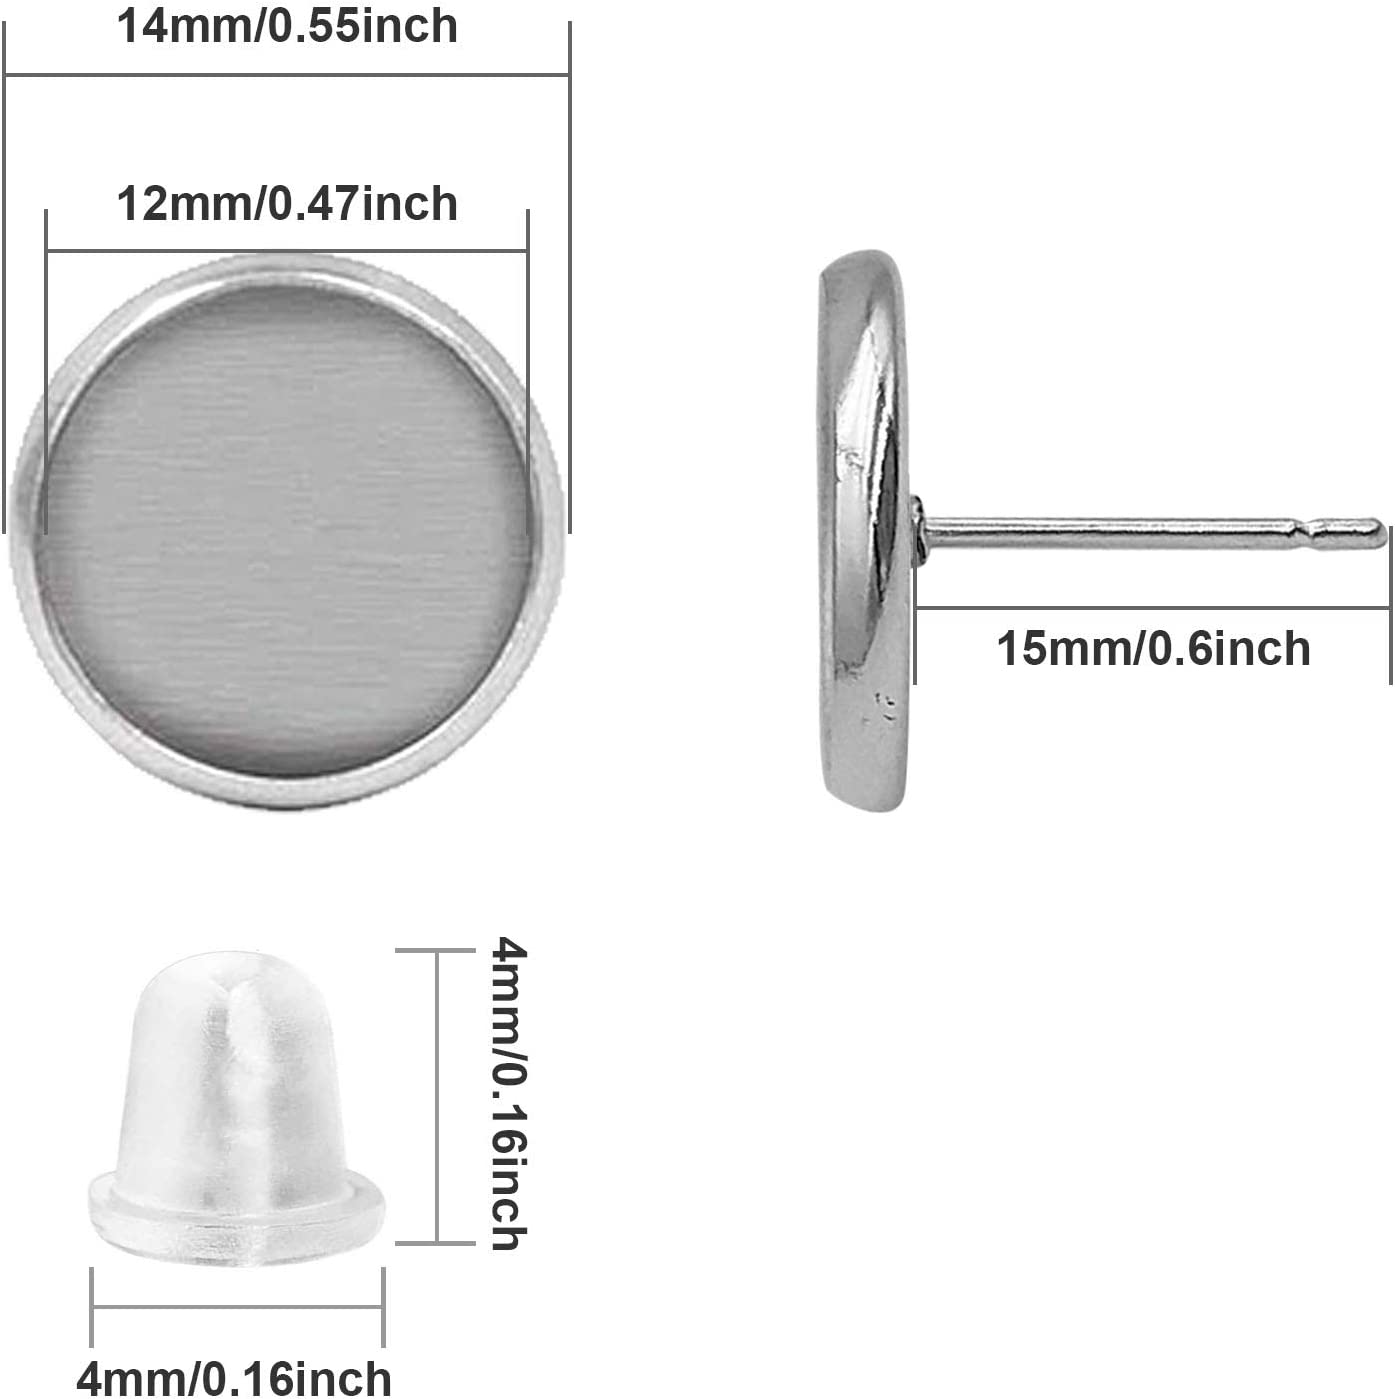 Blank Stud Earring Bezel Silver,200Pcs Stud Earring Kit Includes 100Pcs Cup Post Earrings and 100Pcs Rubber Earring Backs for DIY Jewelry Findings,Earring Making Supplies - image 5 of 5